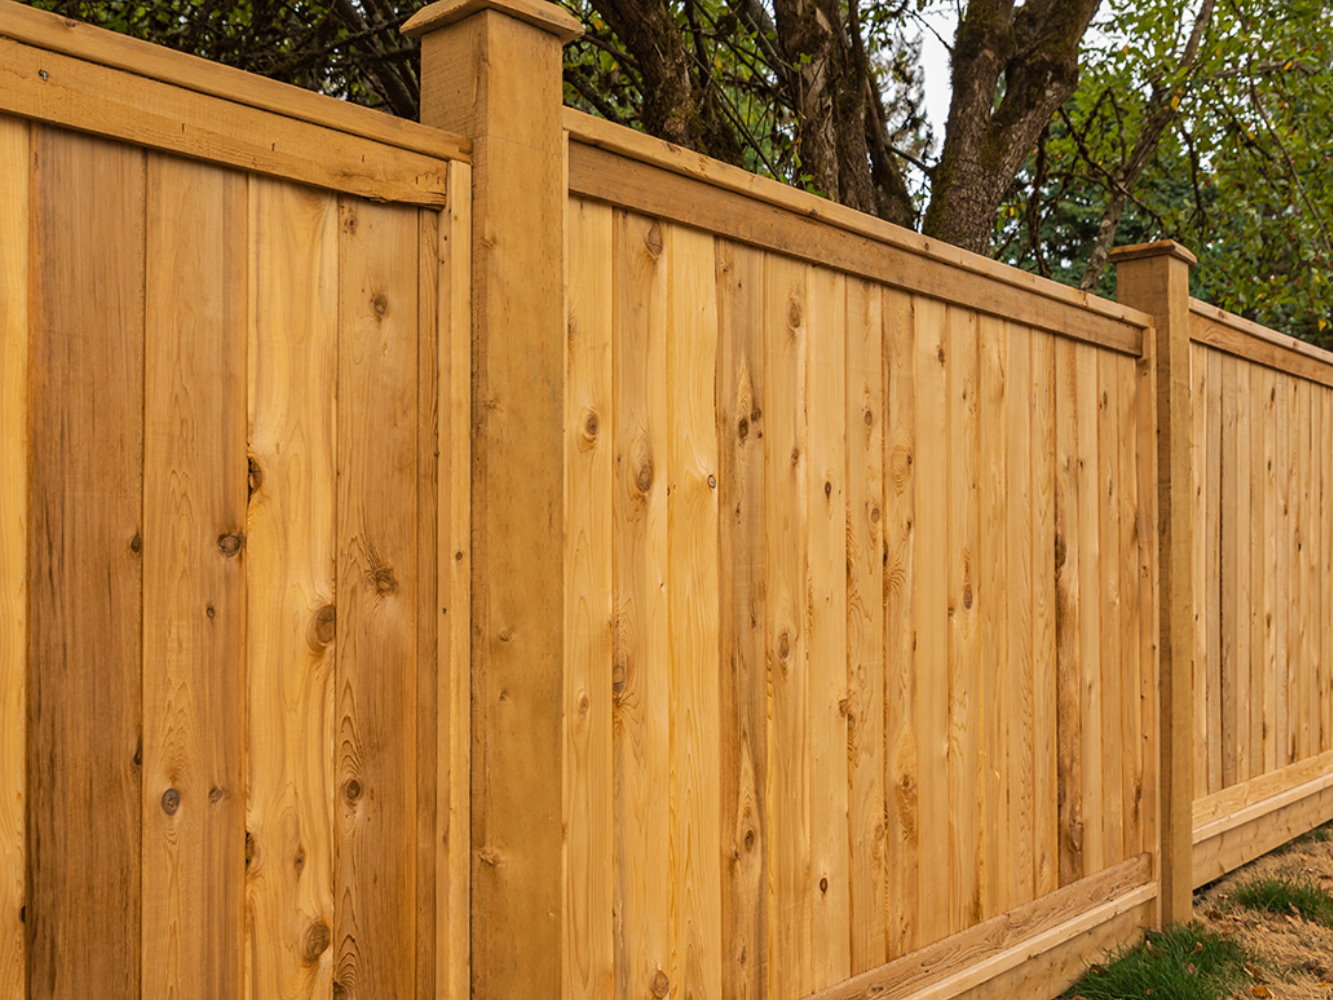 Alma GA cap and trim style wood fence